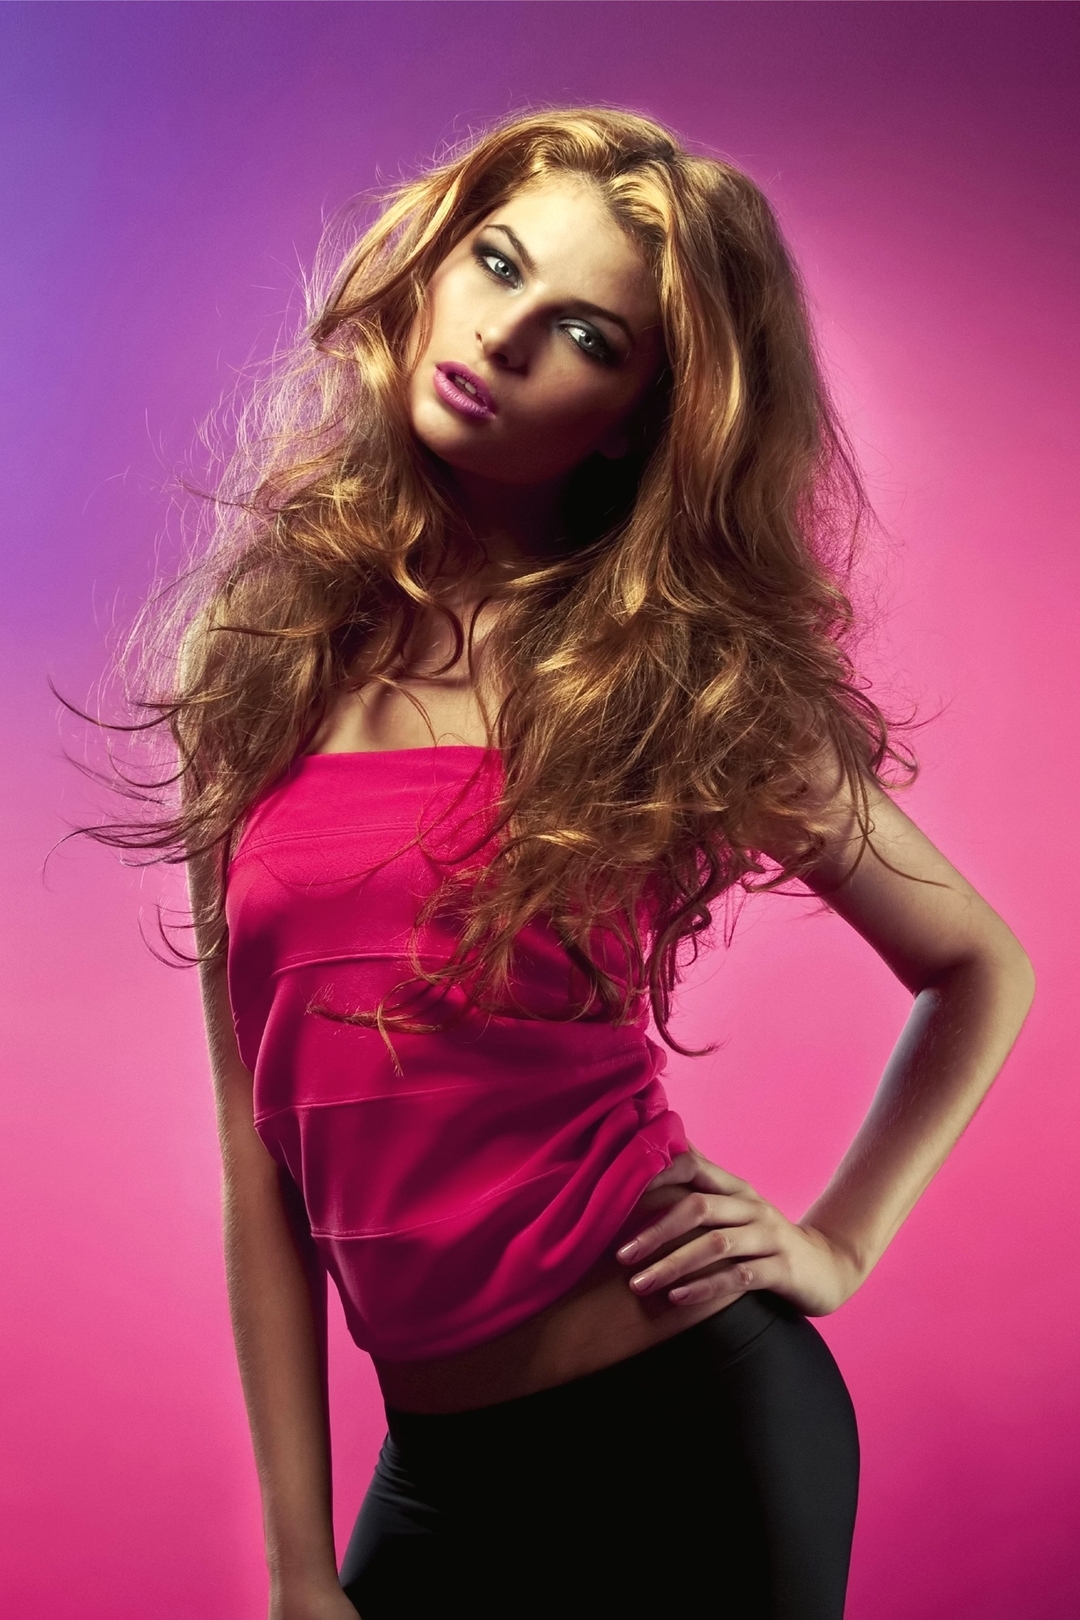 Image: Girl, model, hair, figure, posture, bright, color, purple, pink